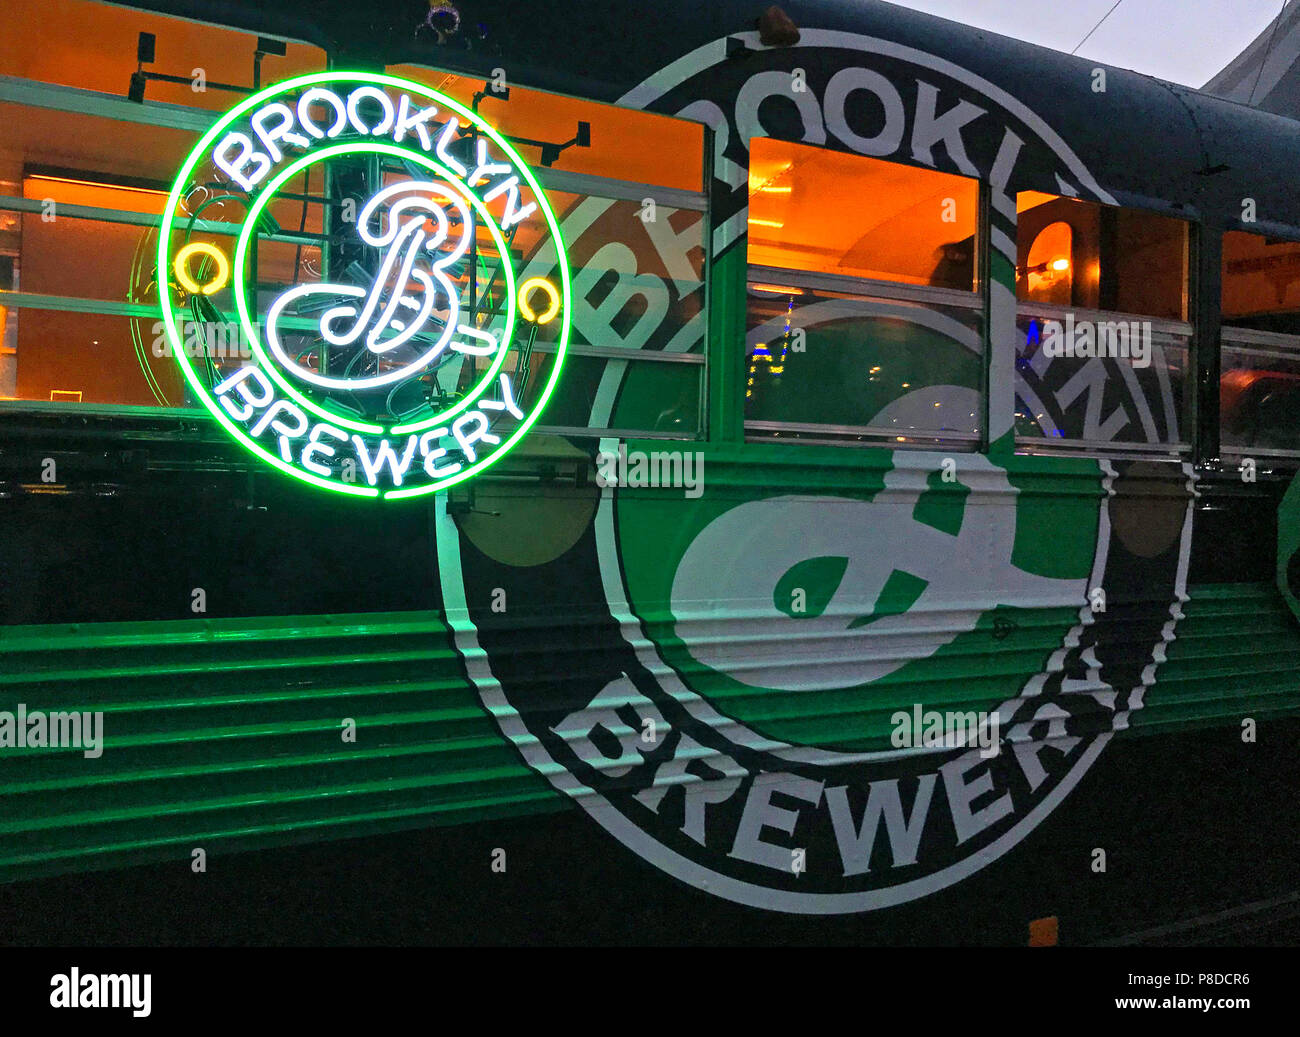 Brooklyn Brewery Bus und Leuchtreklame, Handwerk Bier, Microbrewery, 79 N 11 St, Brooklyn, New York, NY, 11249, USA Stockfoto